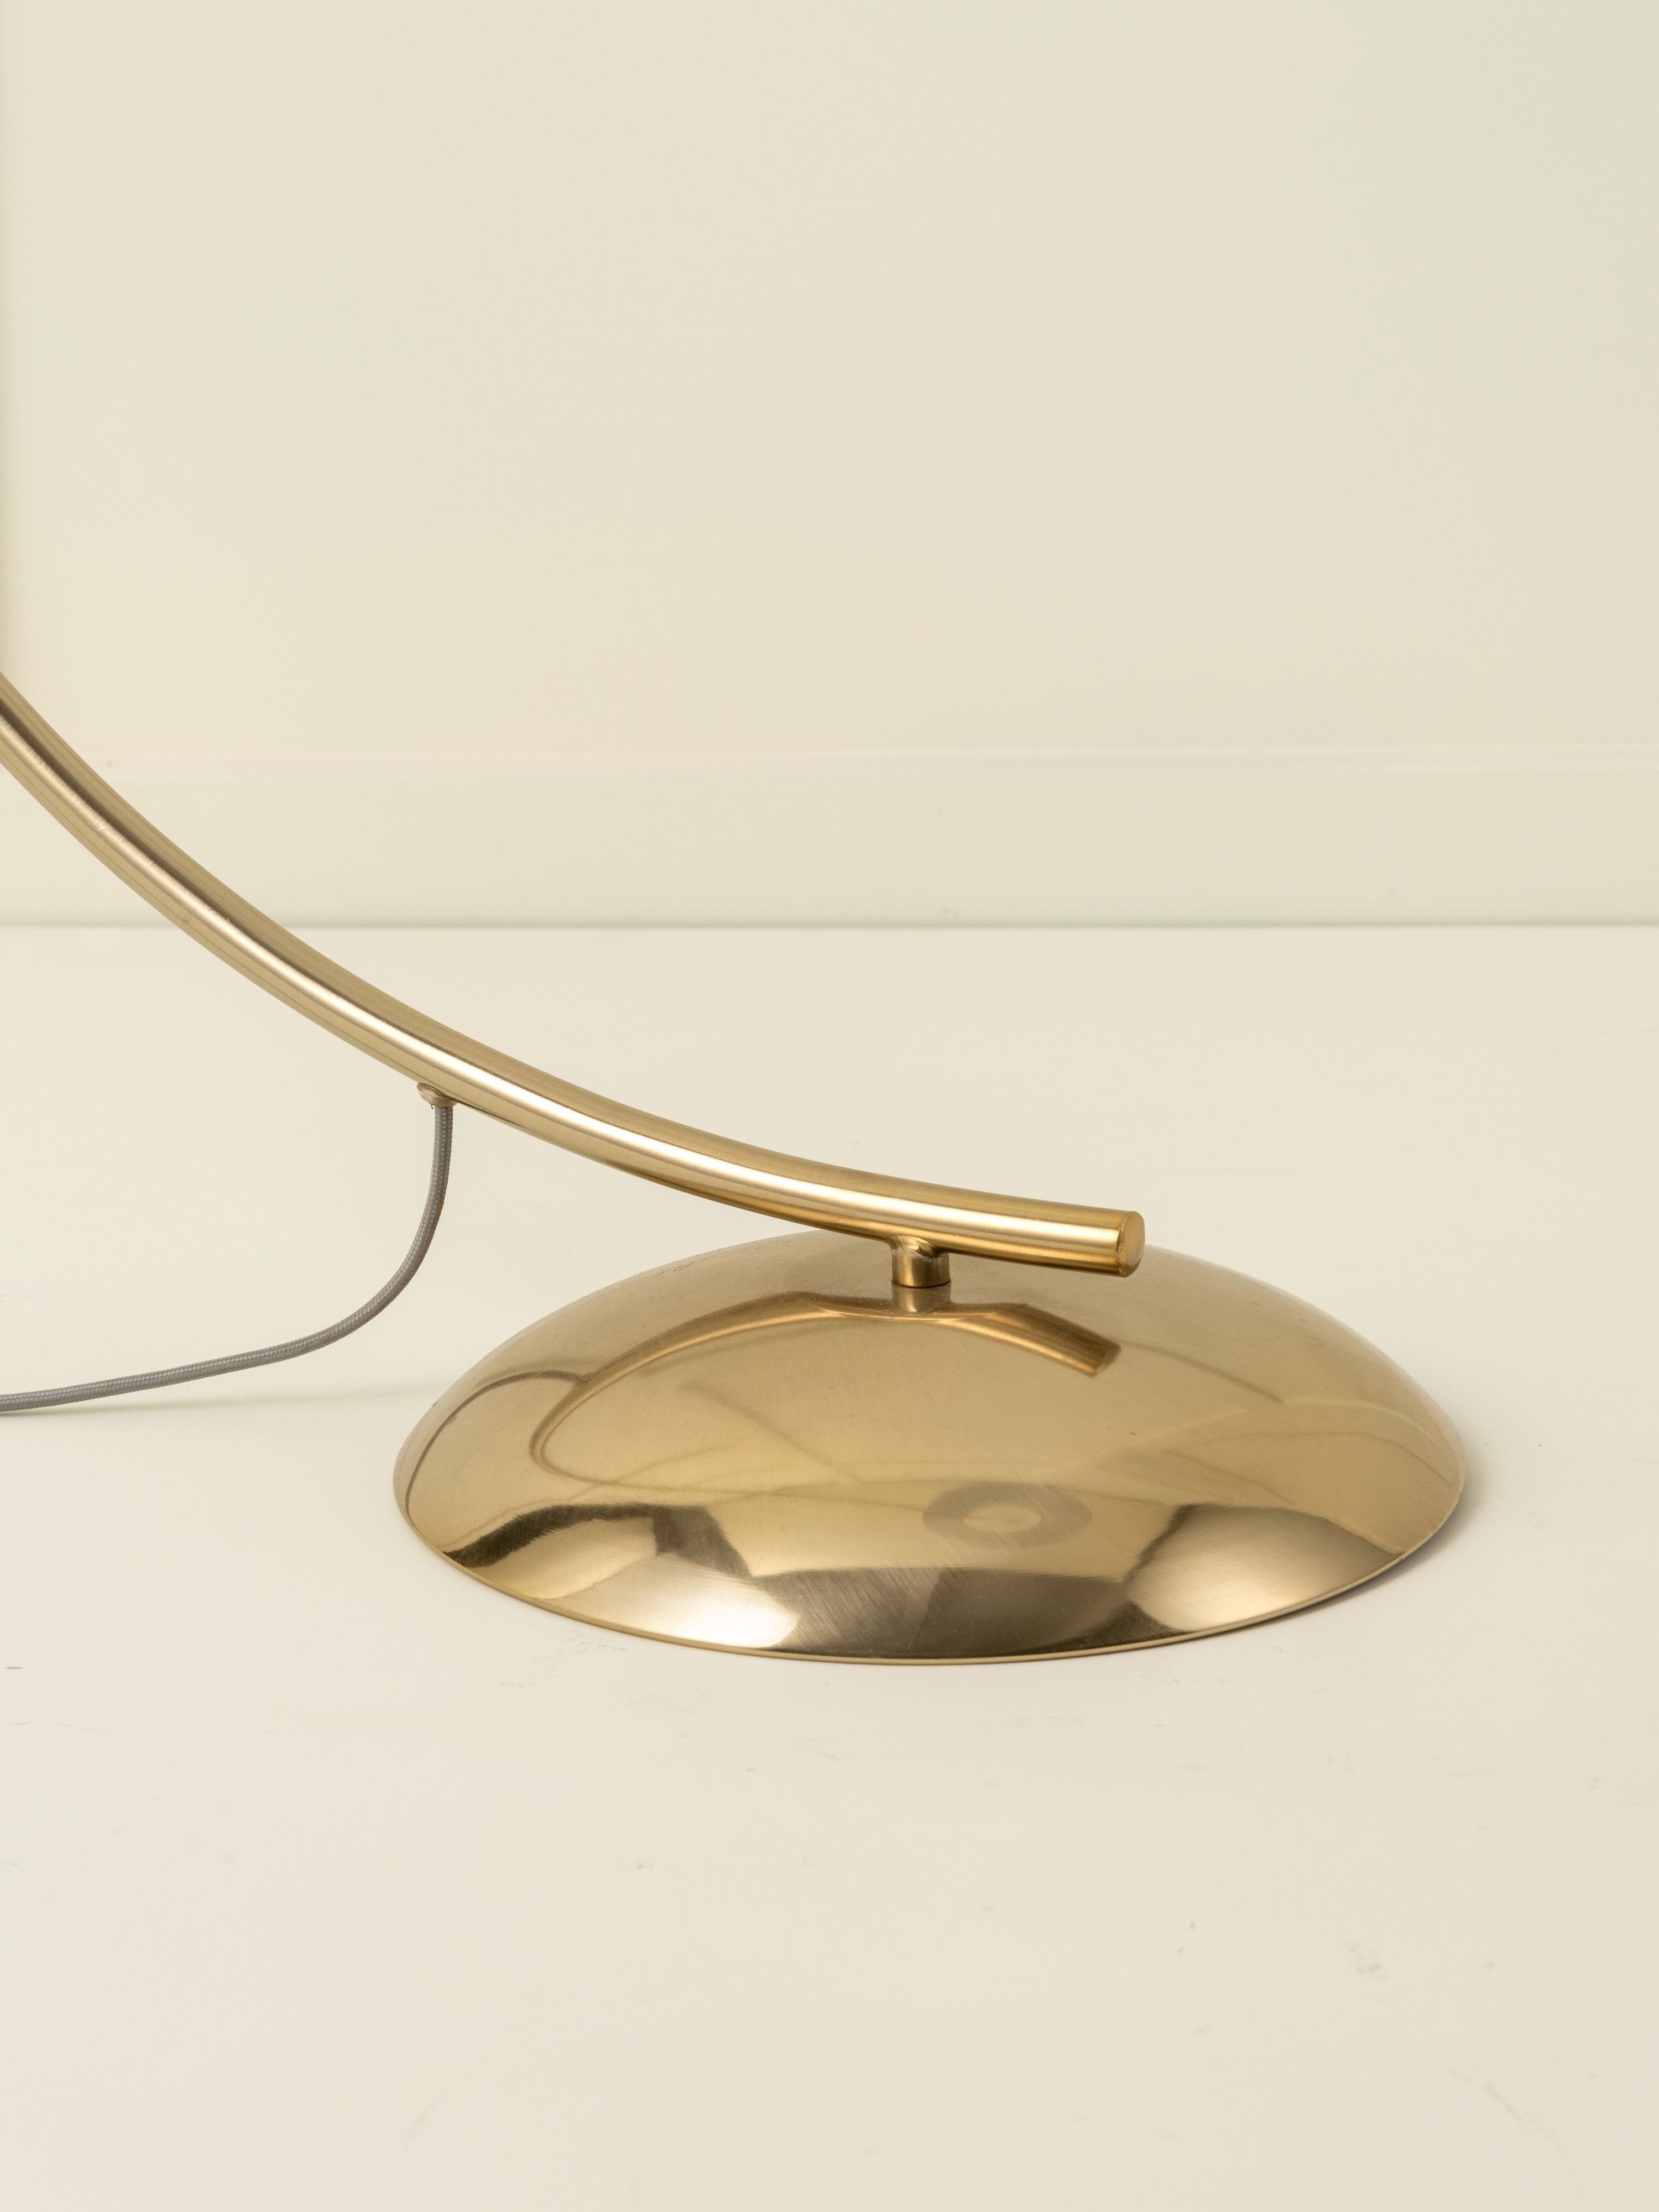 Circo - 1 light arc brass and natural linen floor lamp | Floor Lamp | Lights & Lamps | UK | Modern Affordable Designer Lighting